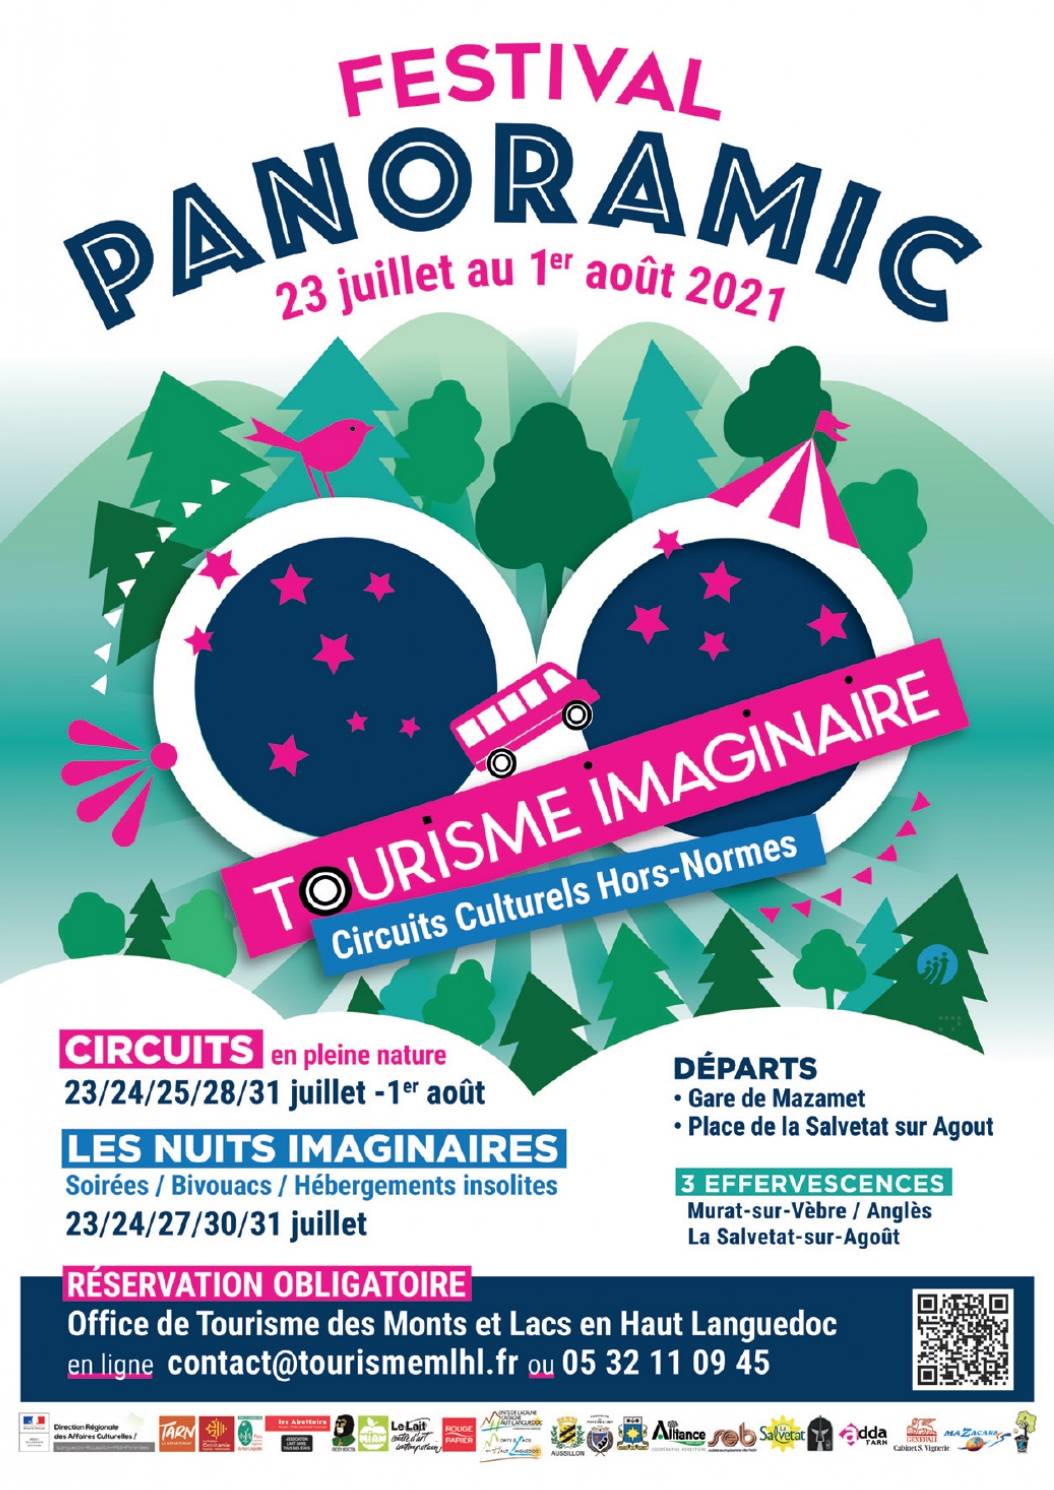 Tourisme imaginaire - Festival Panoramic 1 Juin 2021